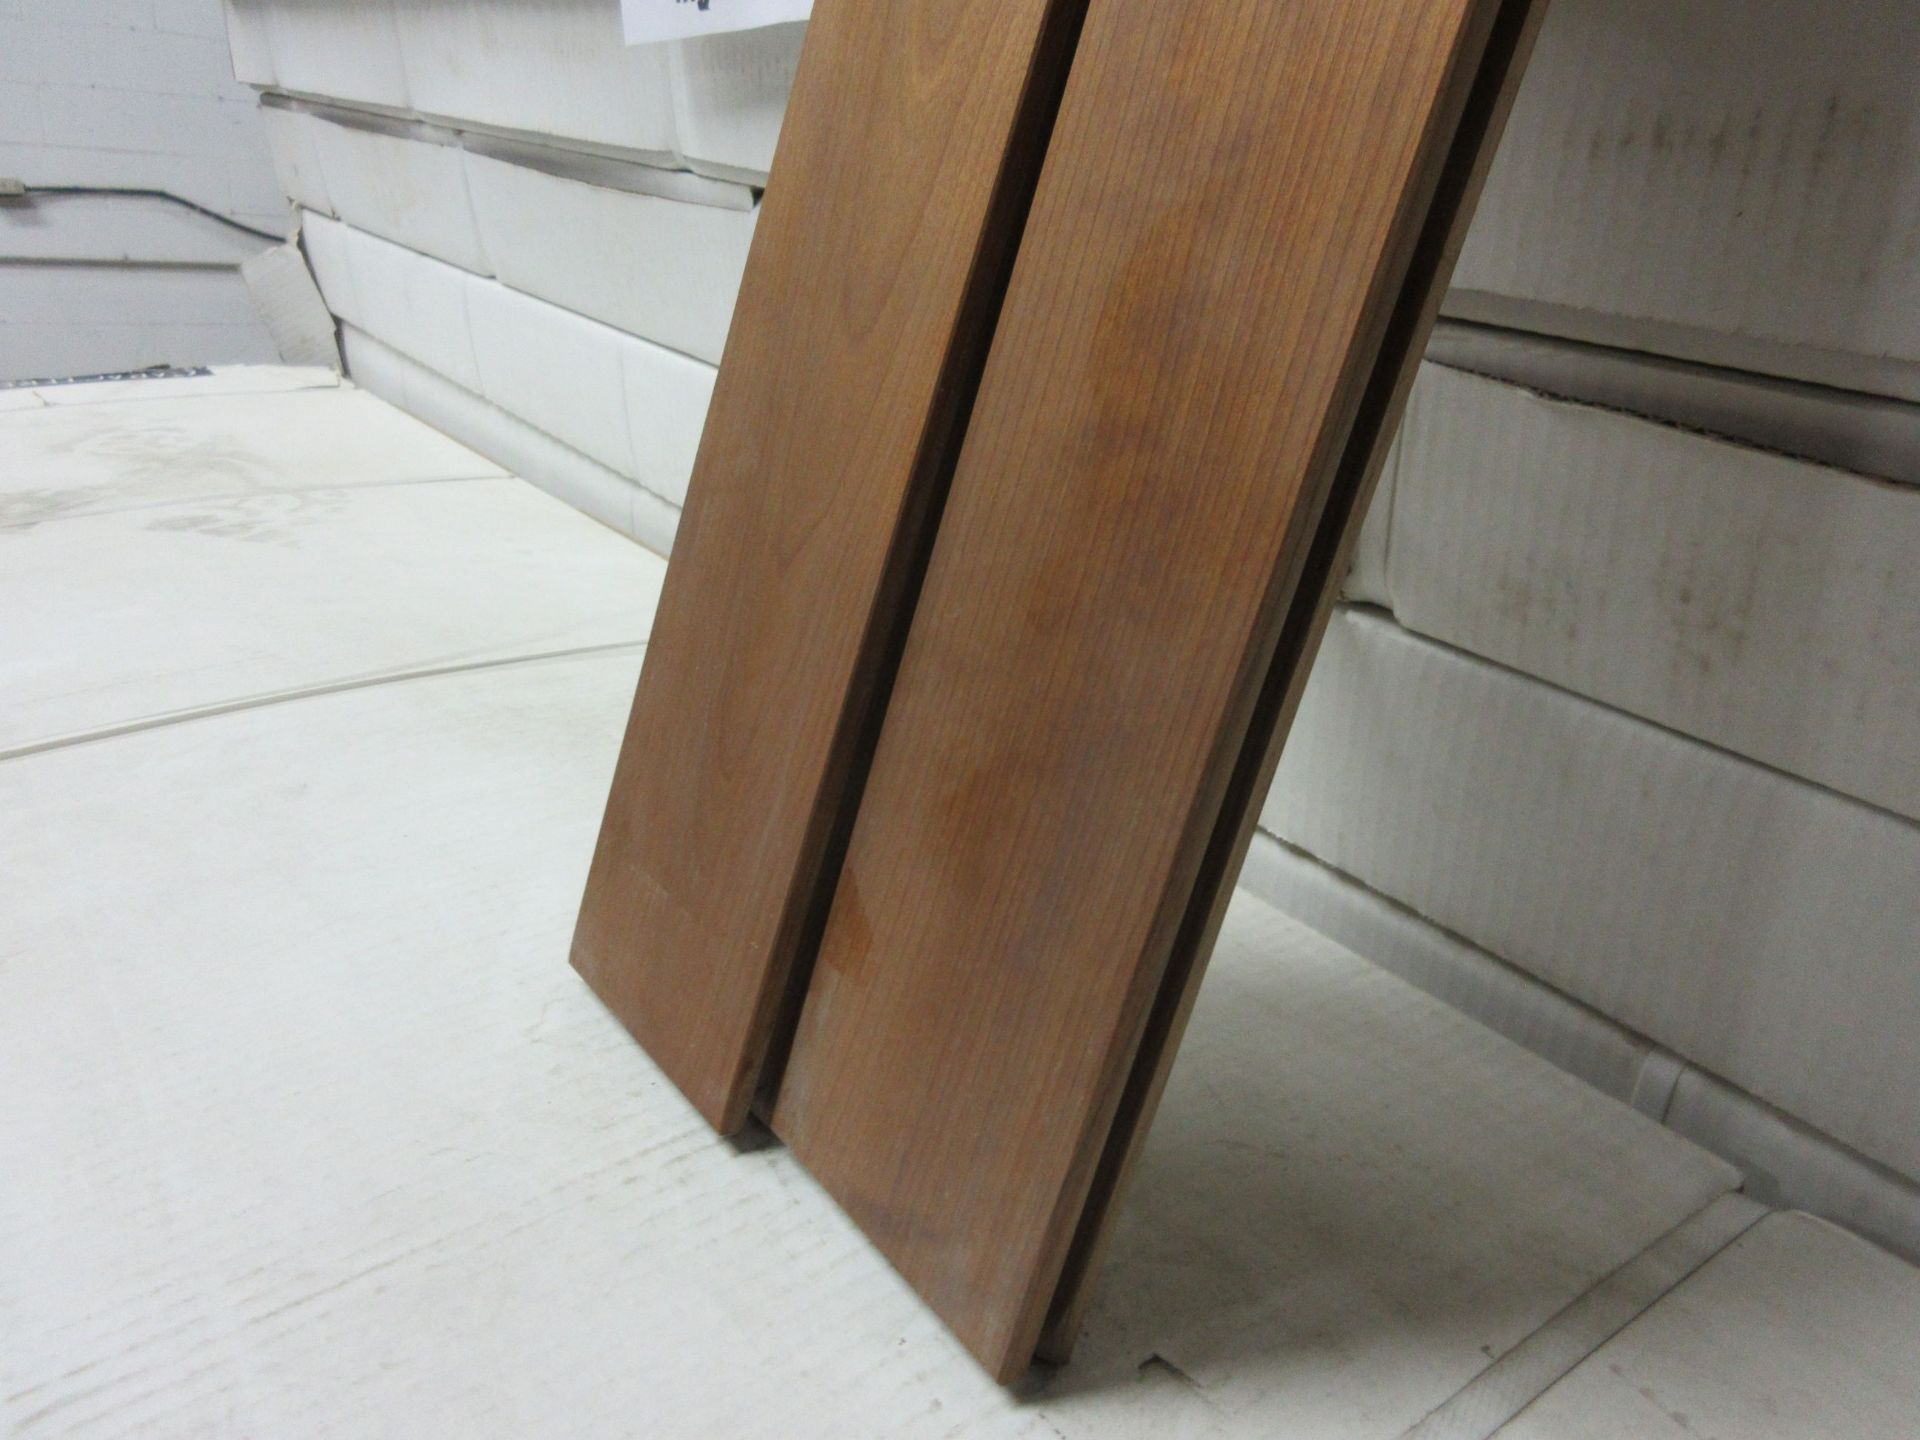 Hardwood flooring (birch noisette) 3/4"x 3 1/4" x 8", 60" -26 sq. ft per box (12 boxes) - Image 2 of 5